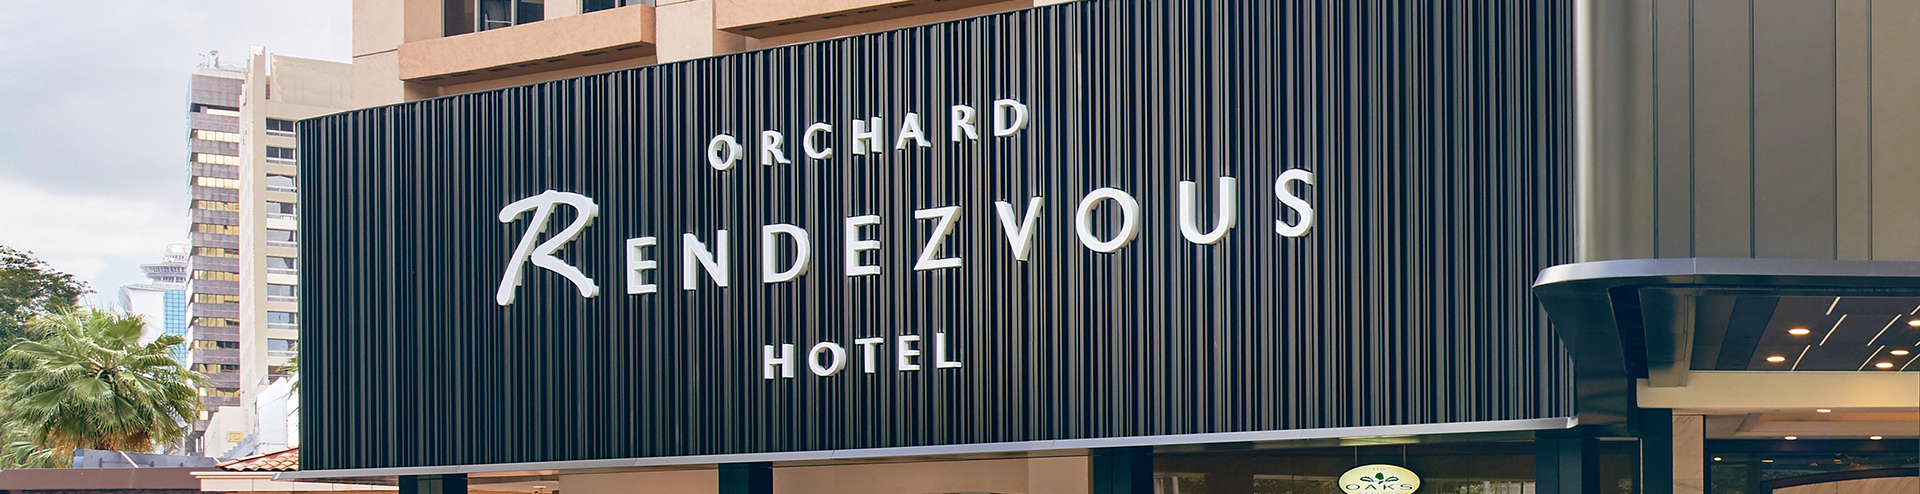 Orchard Parade Hotel